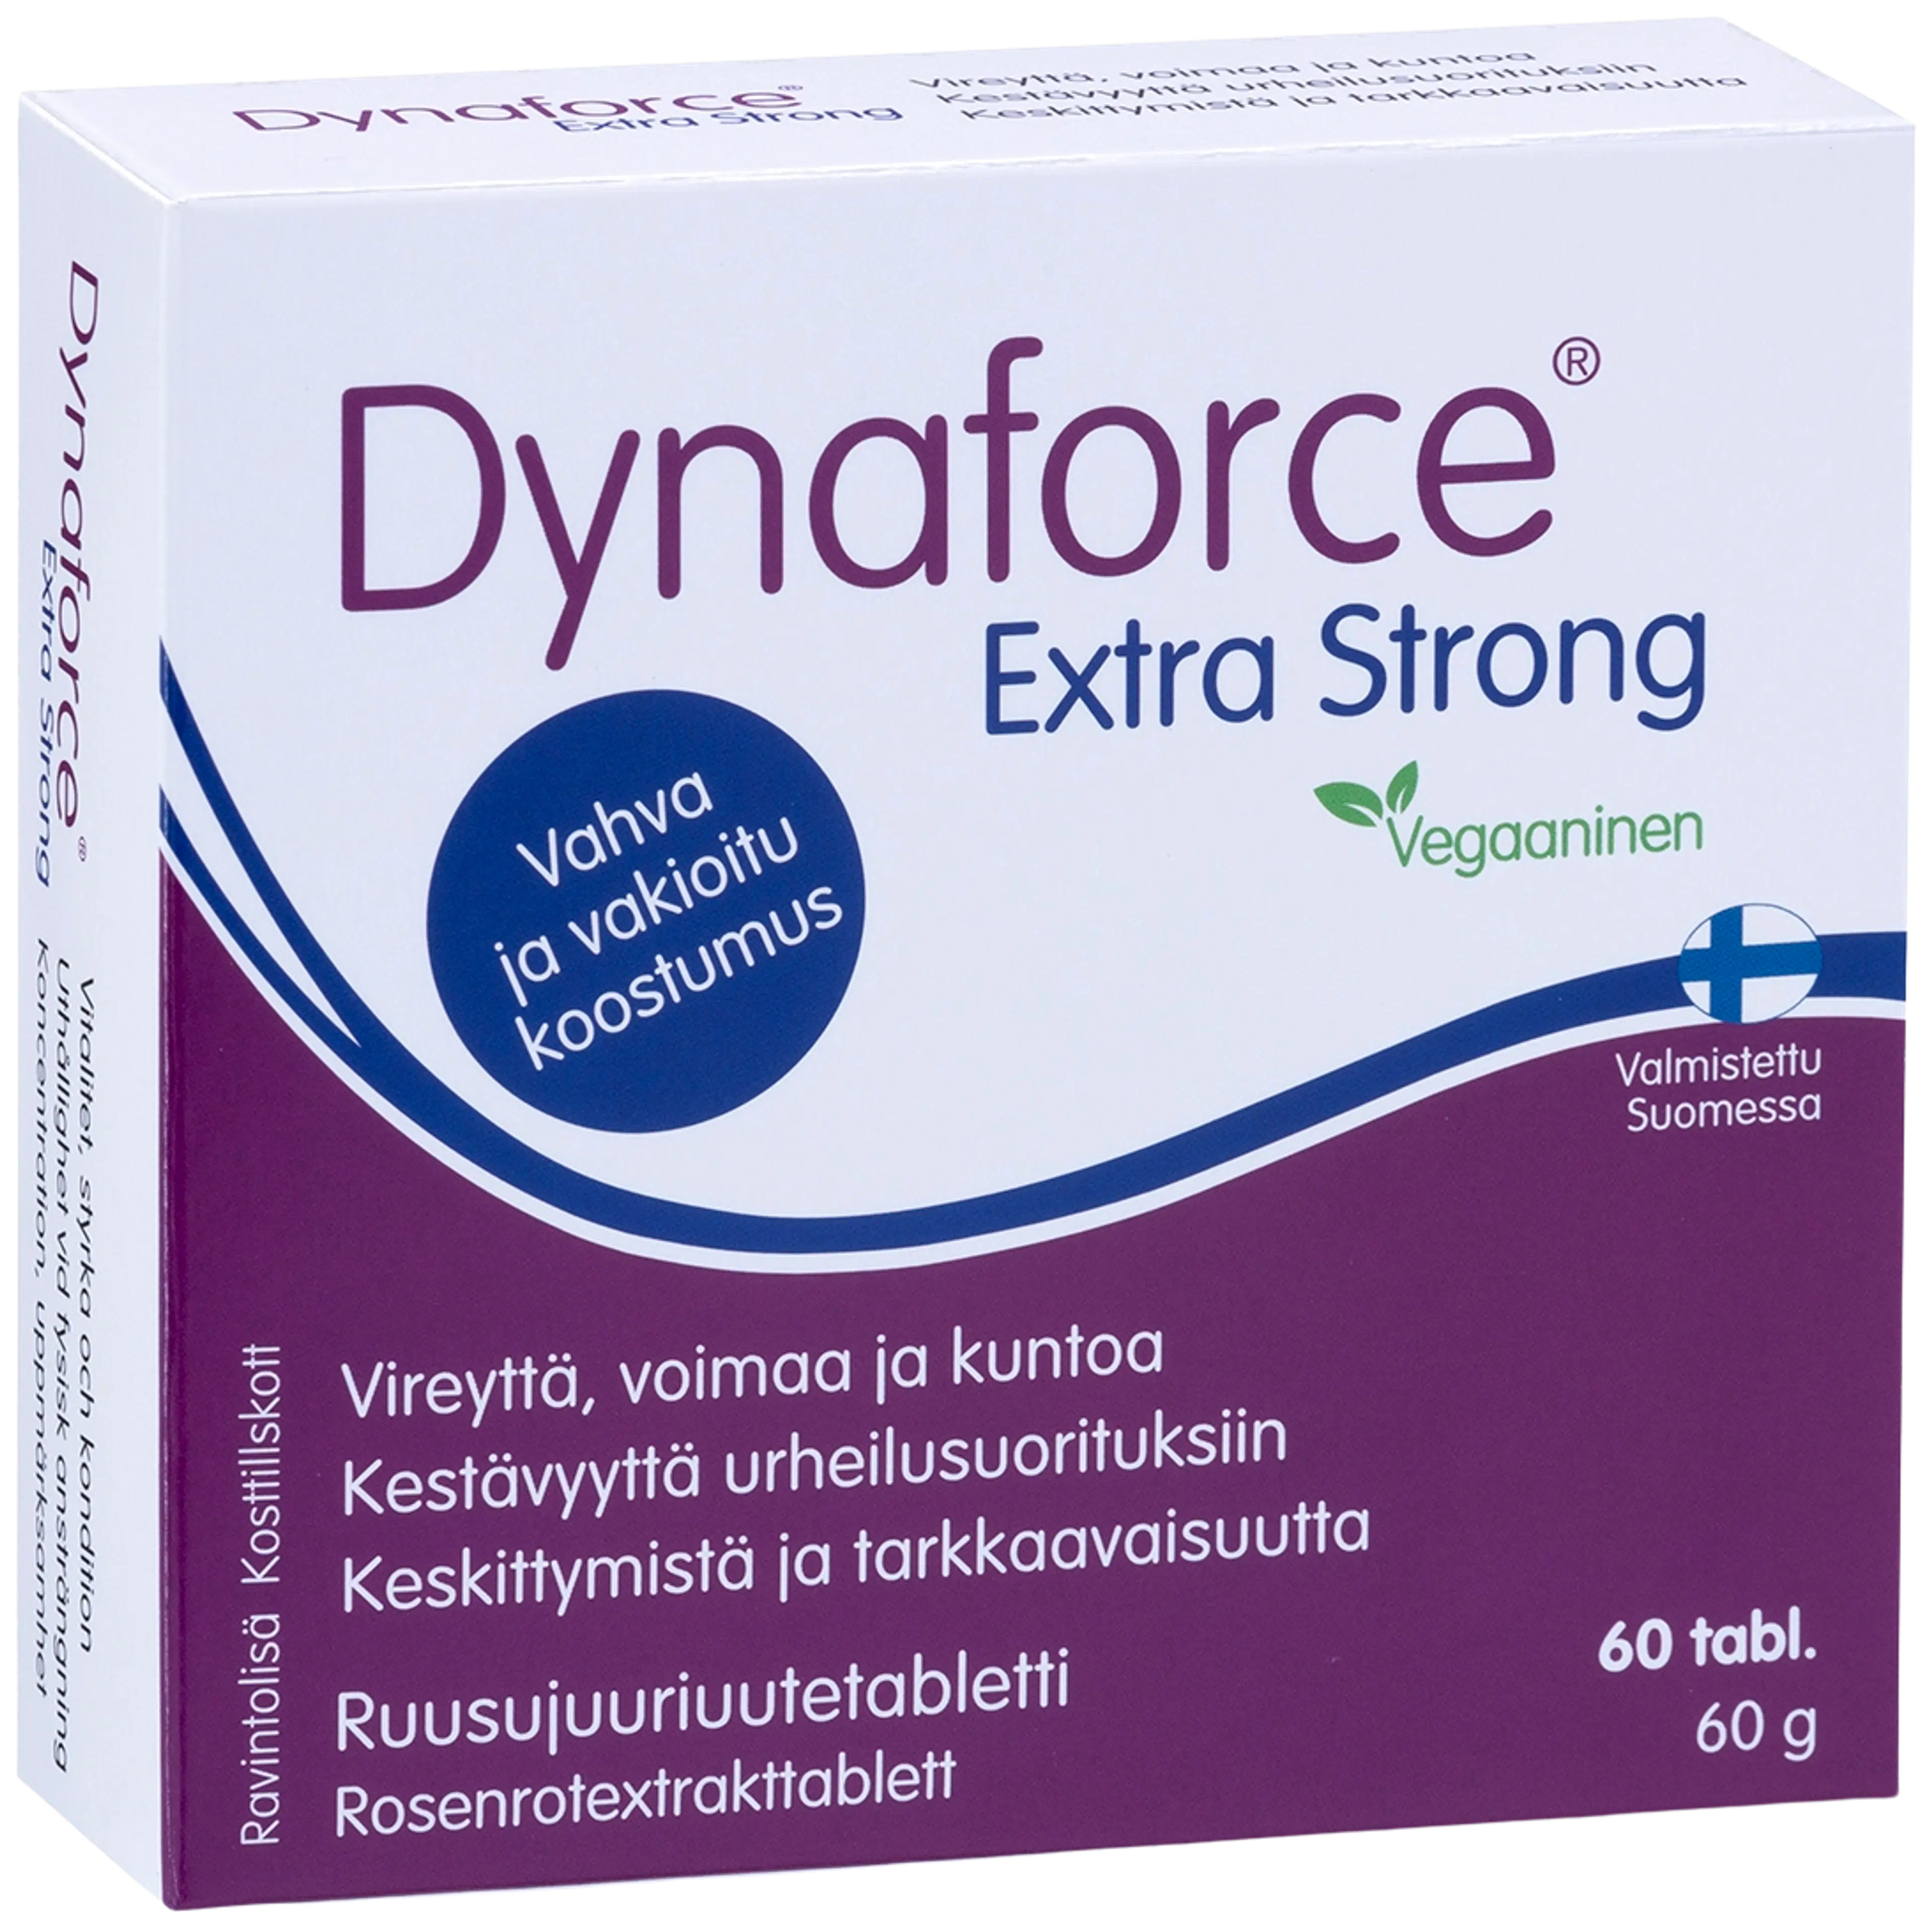 Dynaforce Extra Strong ruusujuuriuutetabletti 60 tabl